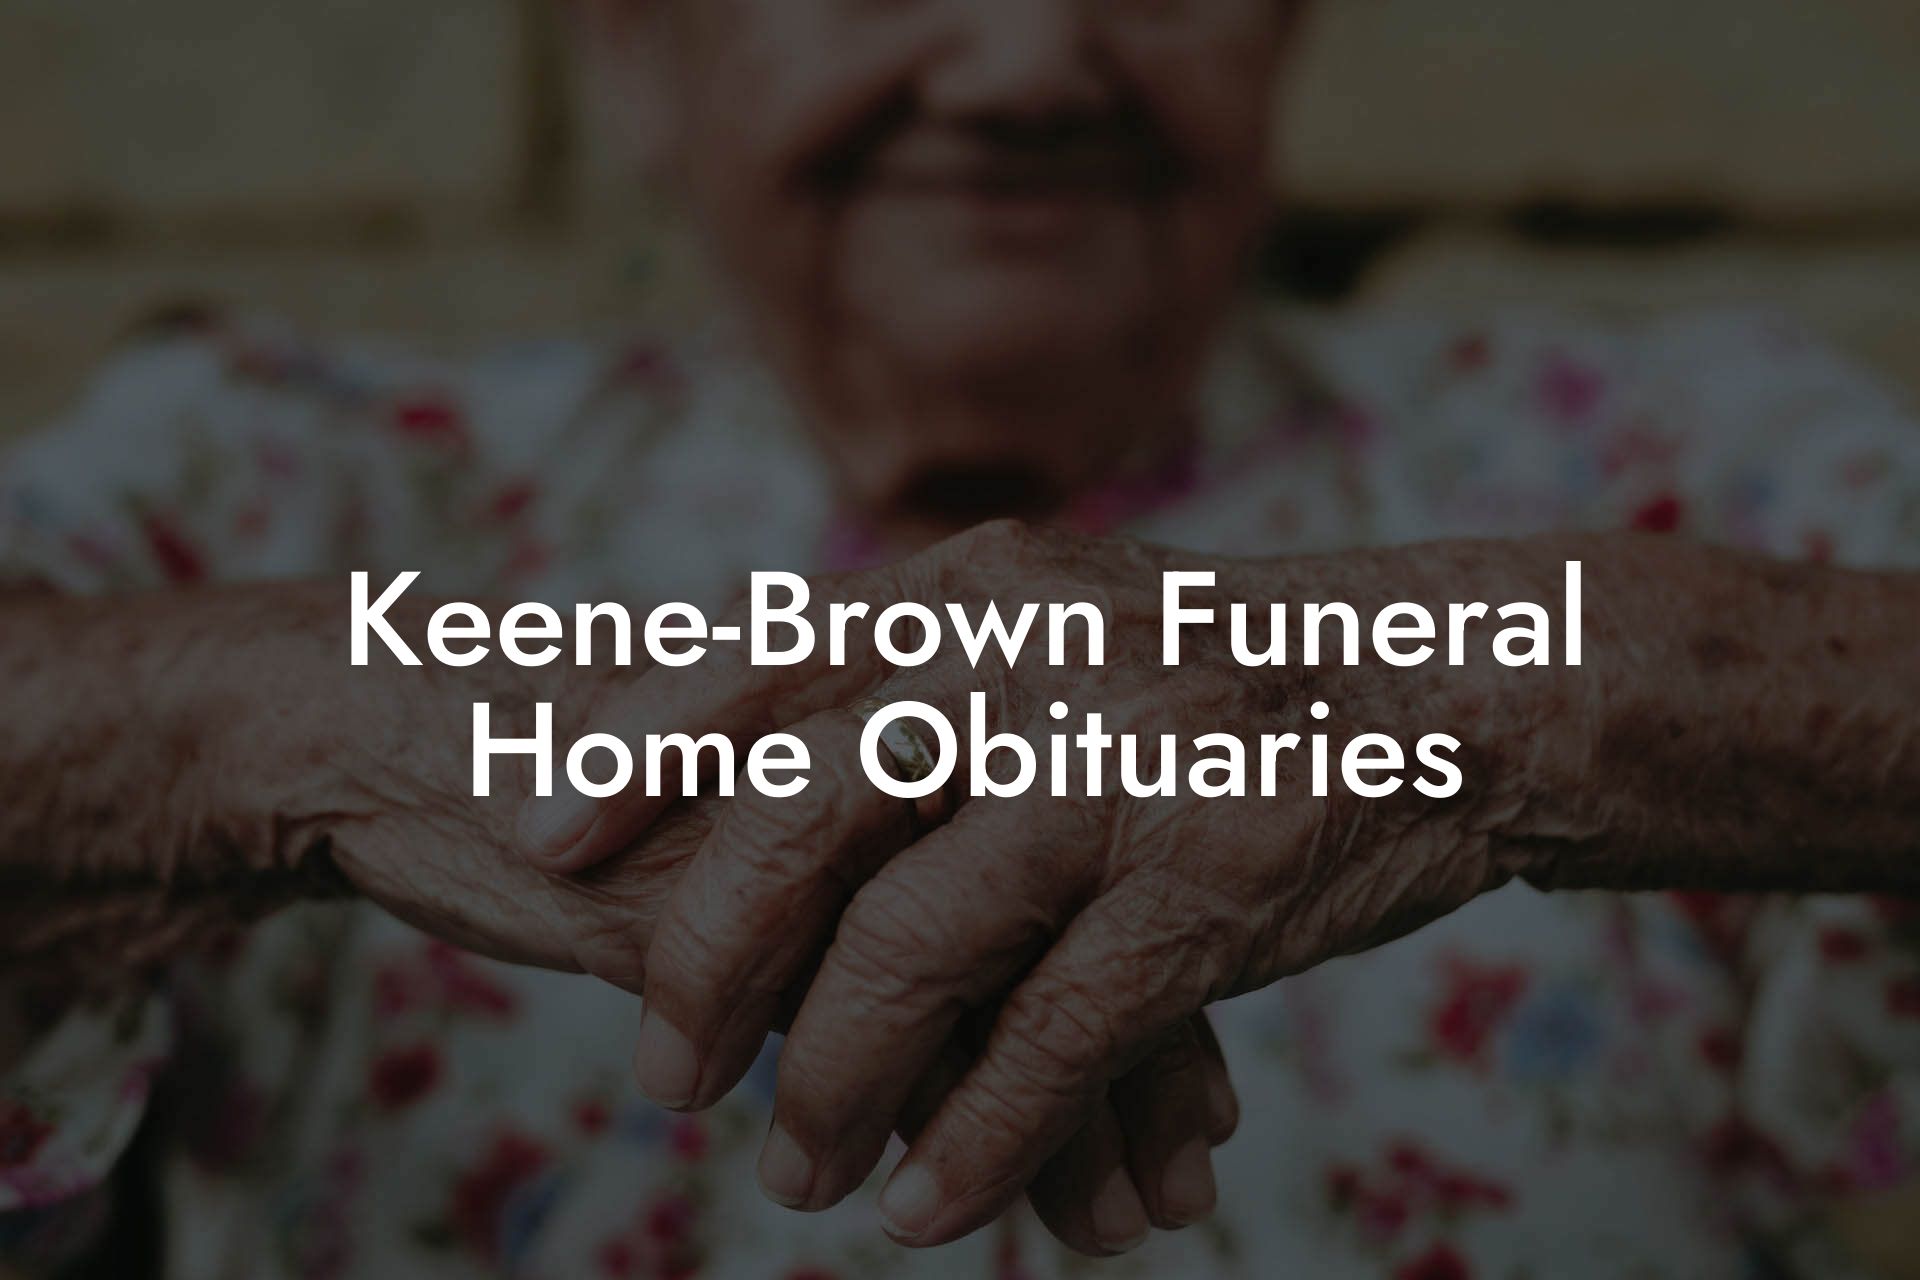 Keene-Brown Funeral Home Obituaries